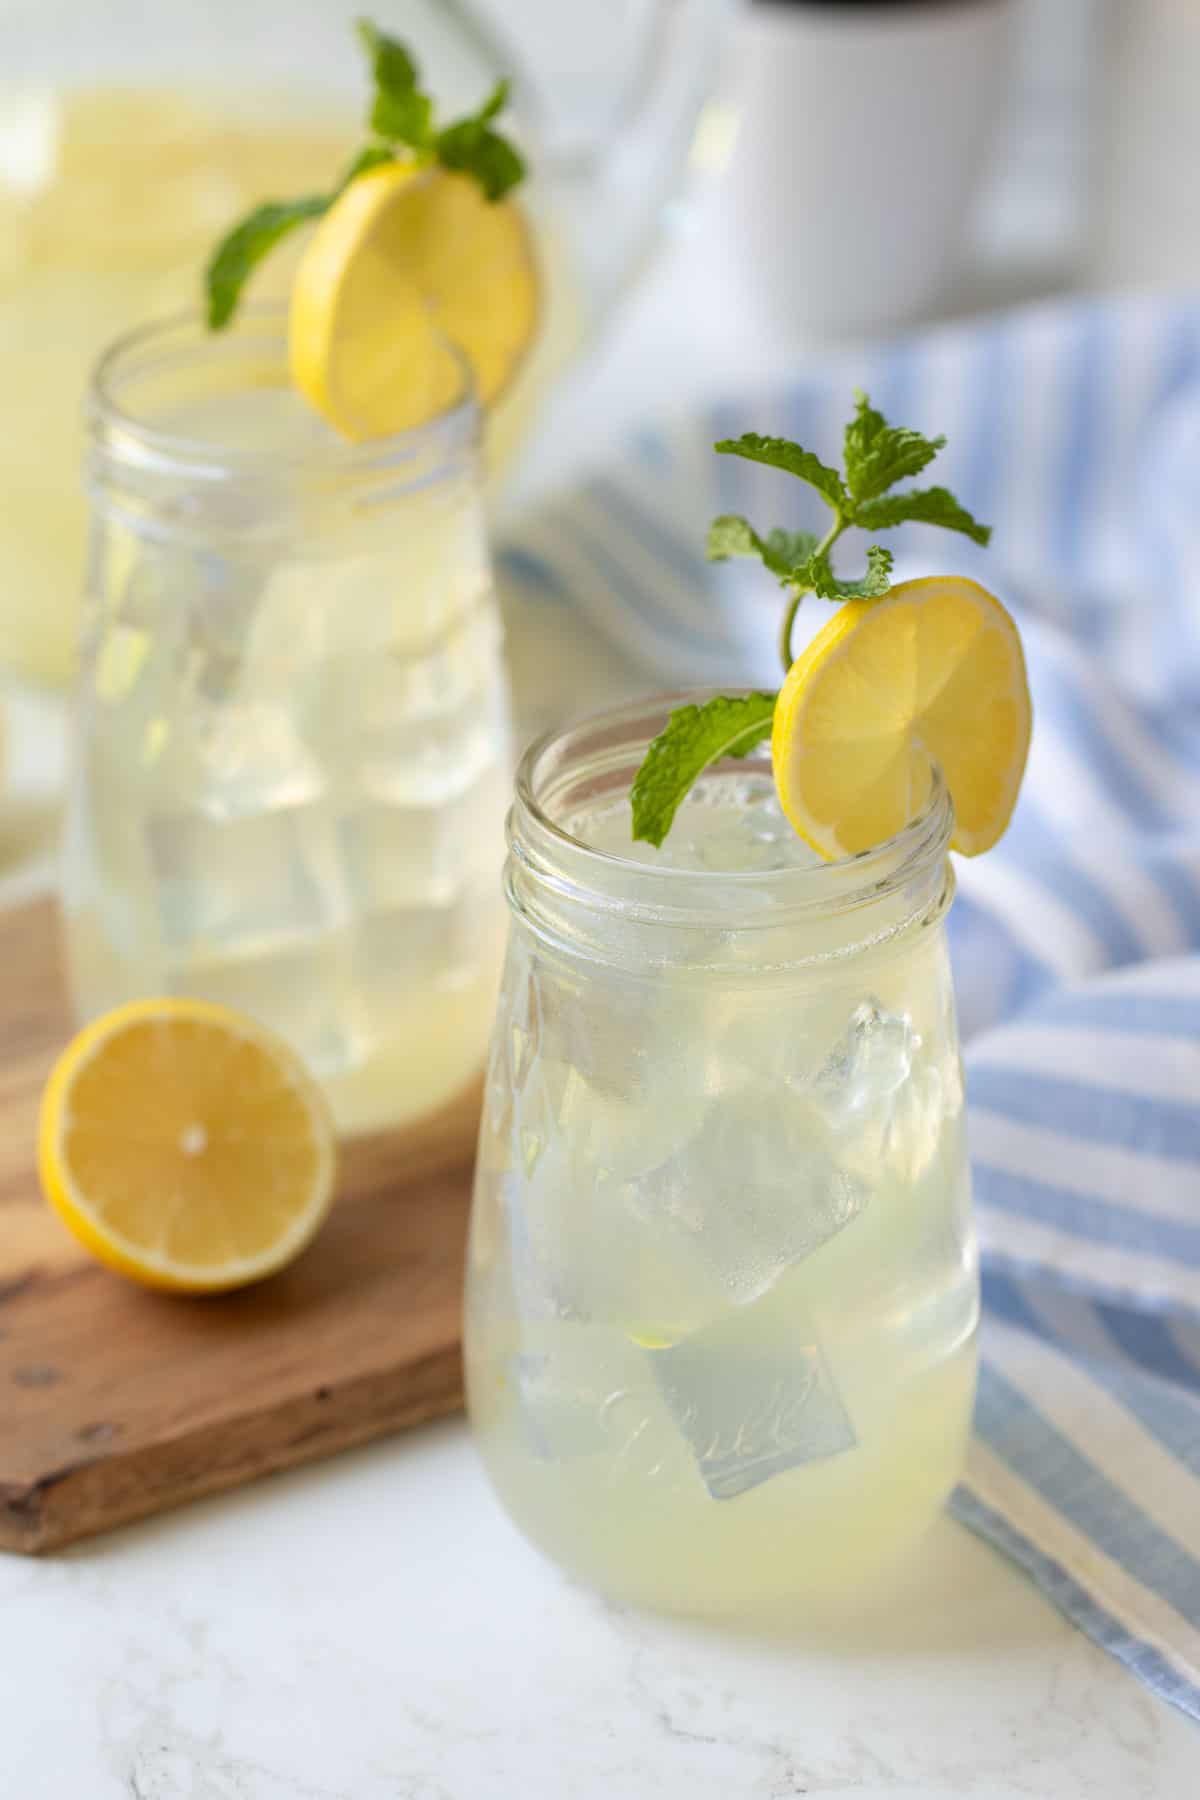 Two Mason jars of homemade lemonade garnished with a lemon wheel and mint sprig.